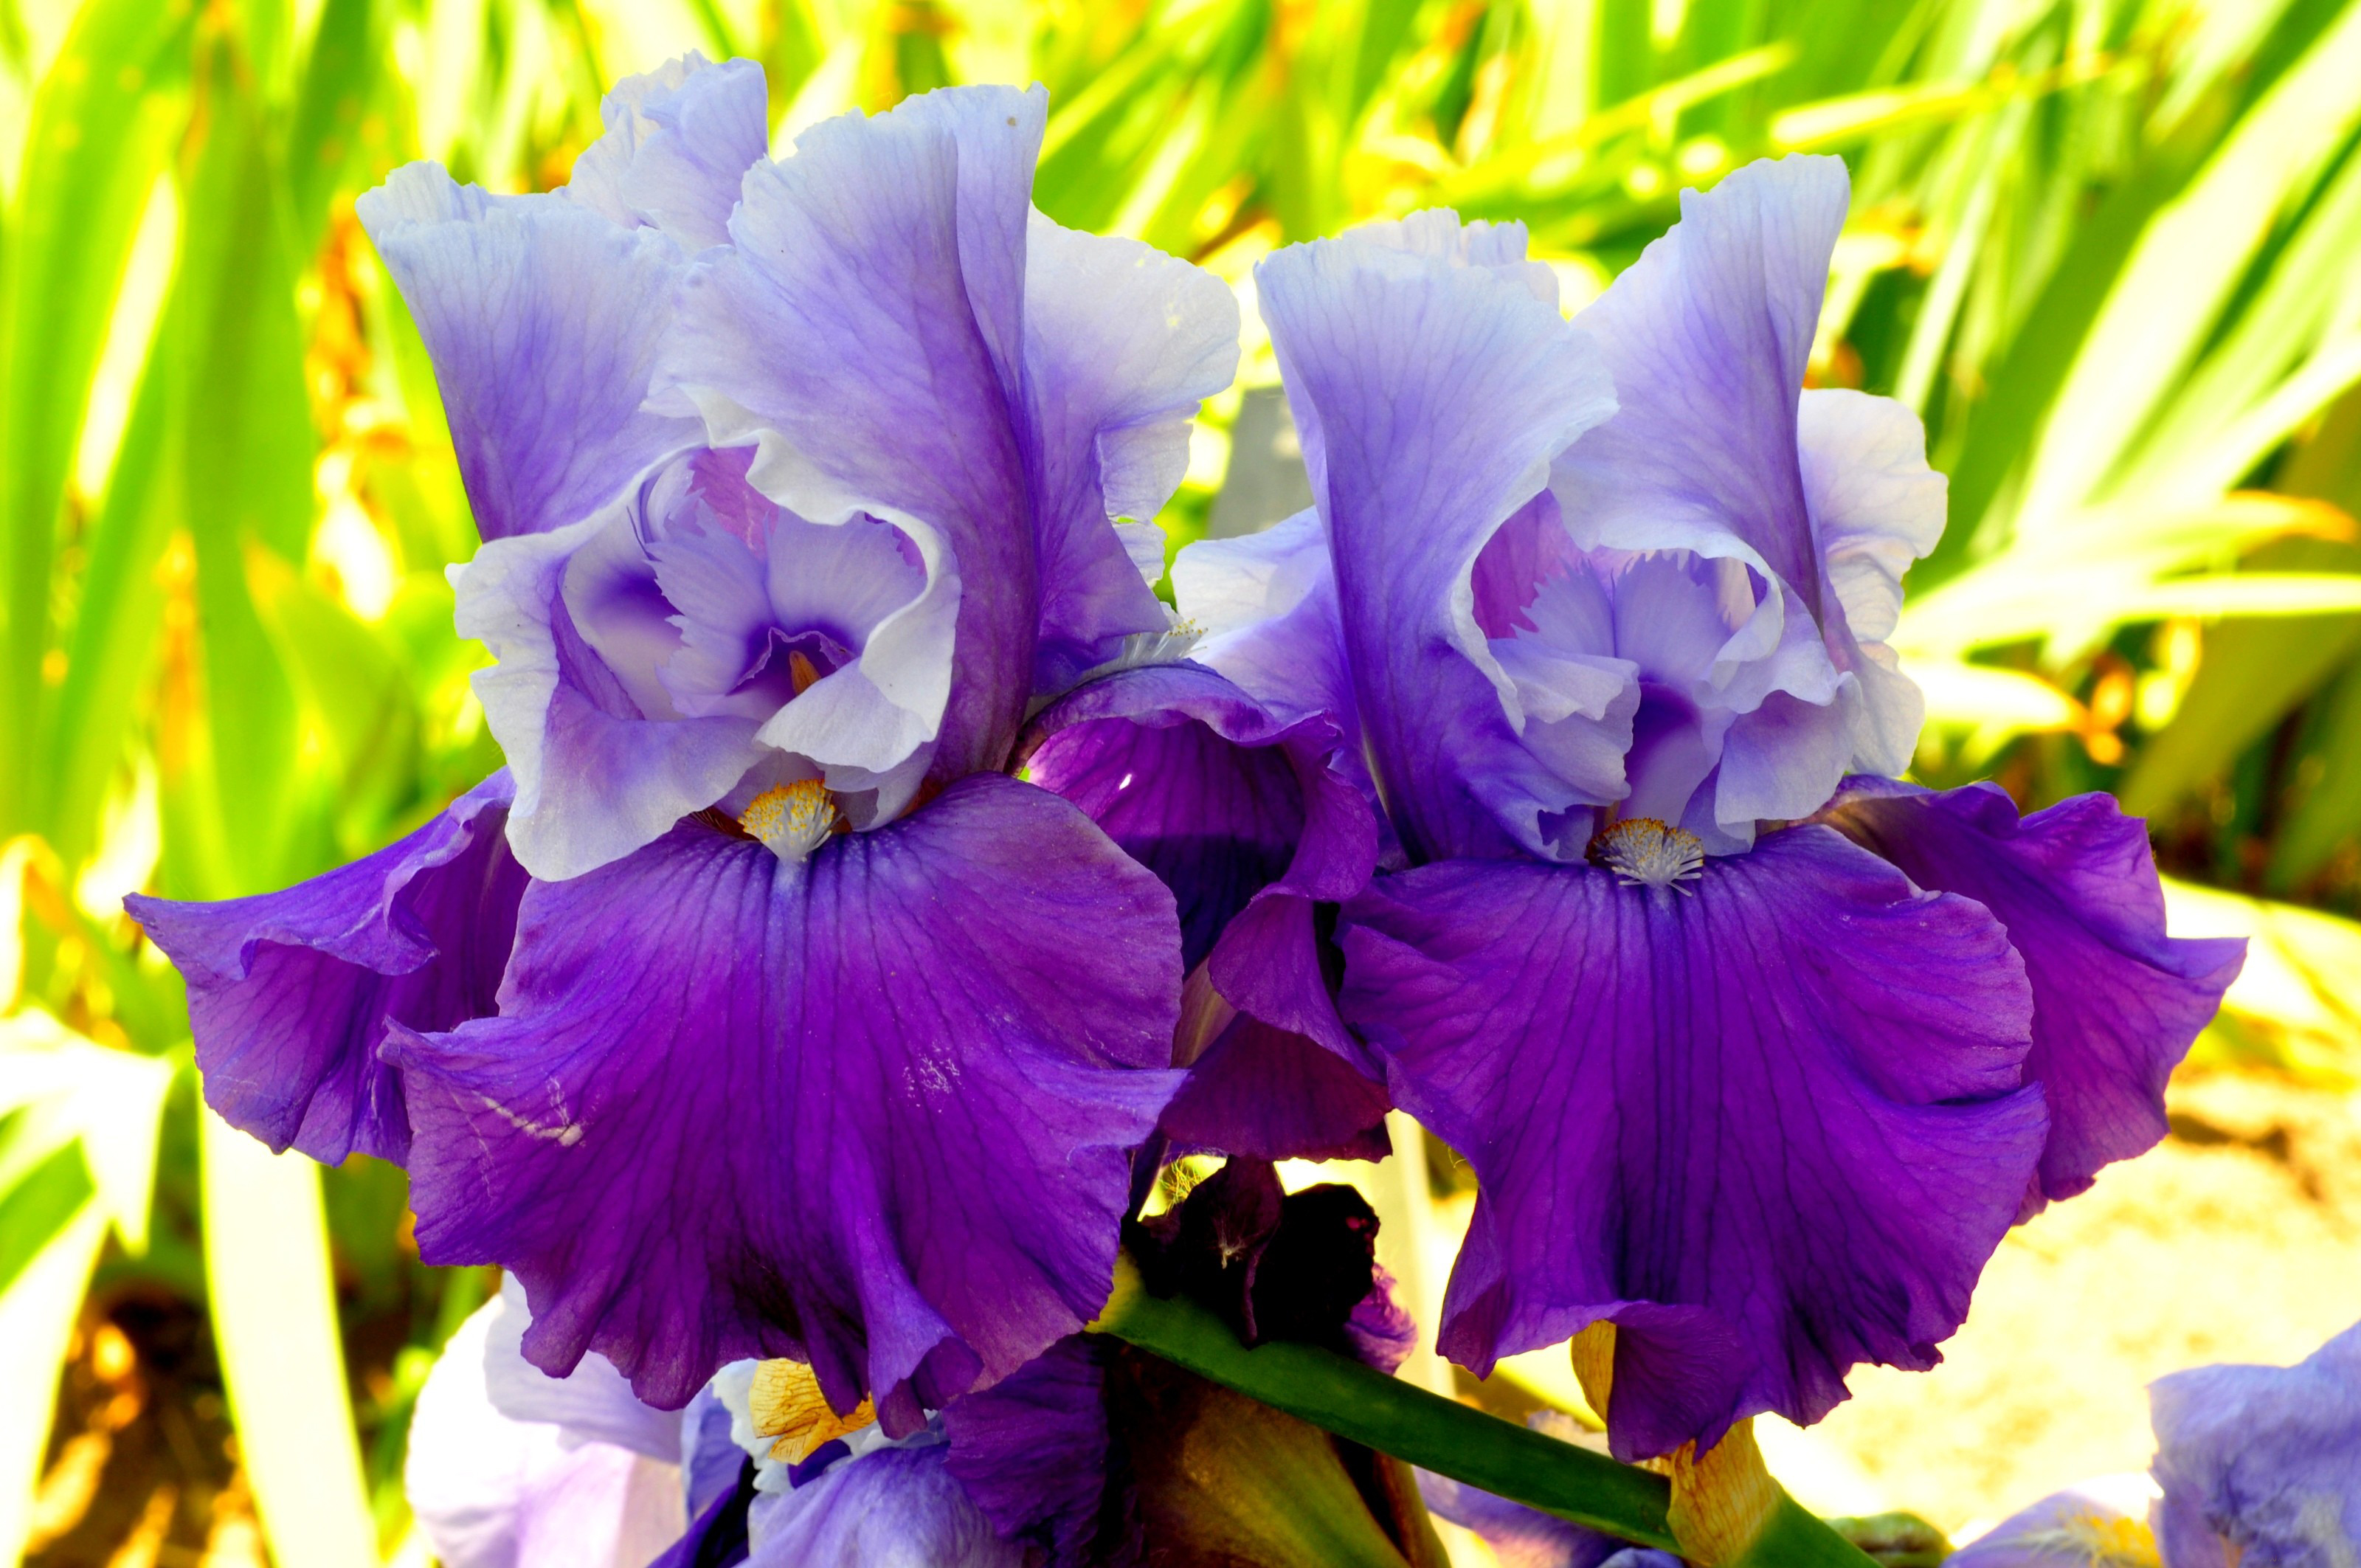 iris wallpaper,flower,flowering plant,petal,purple,plant